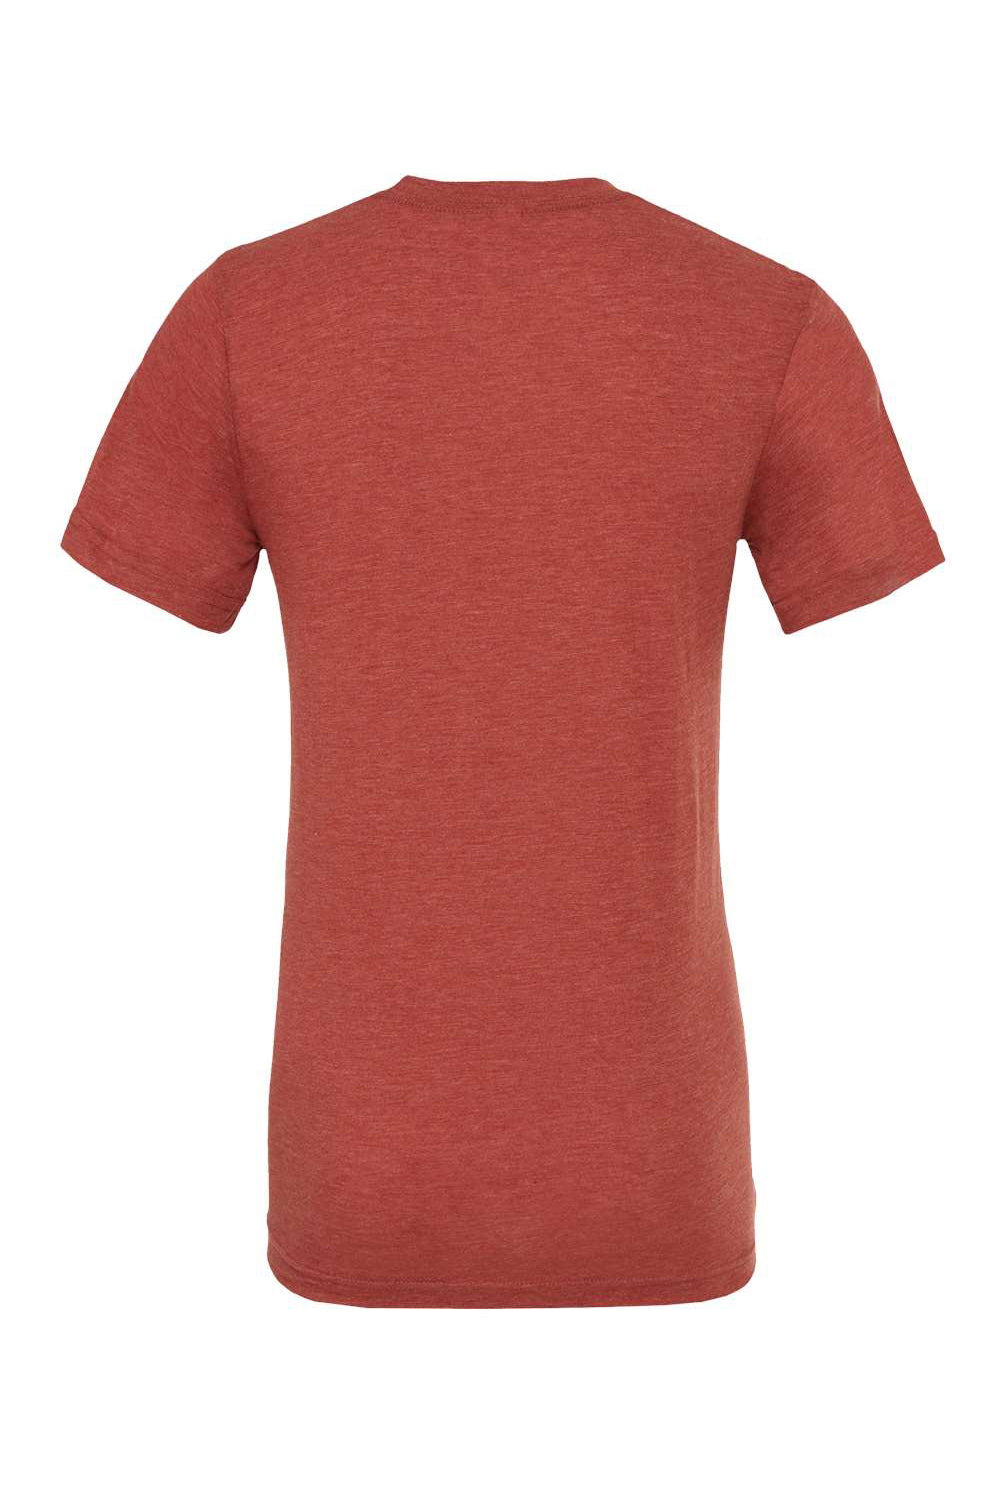 Bella + Canvas BC3413/3413C/3413 Mens Short Sleeve Crewneck T-Shirt Clay Red Flat Back